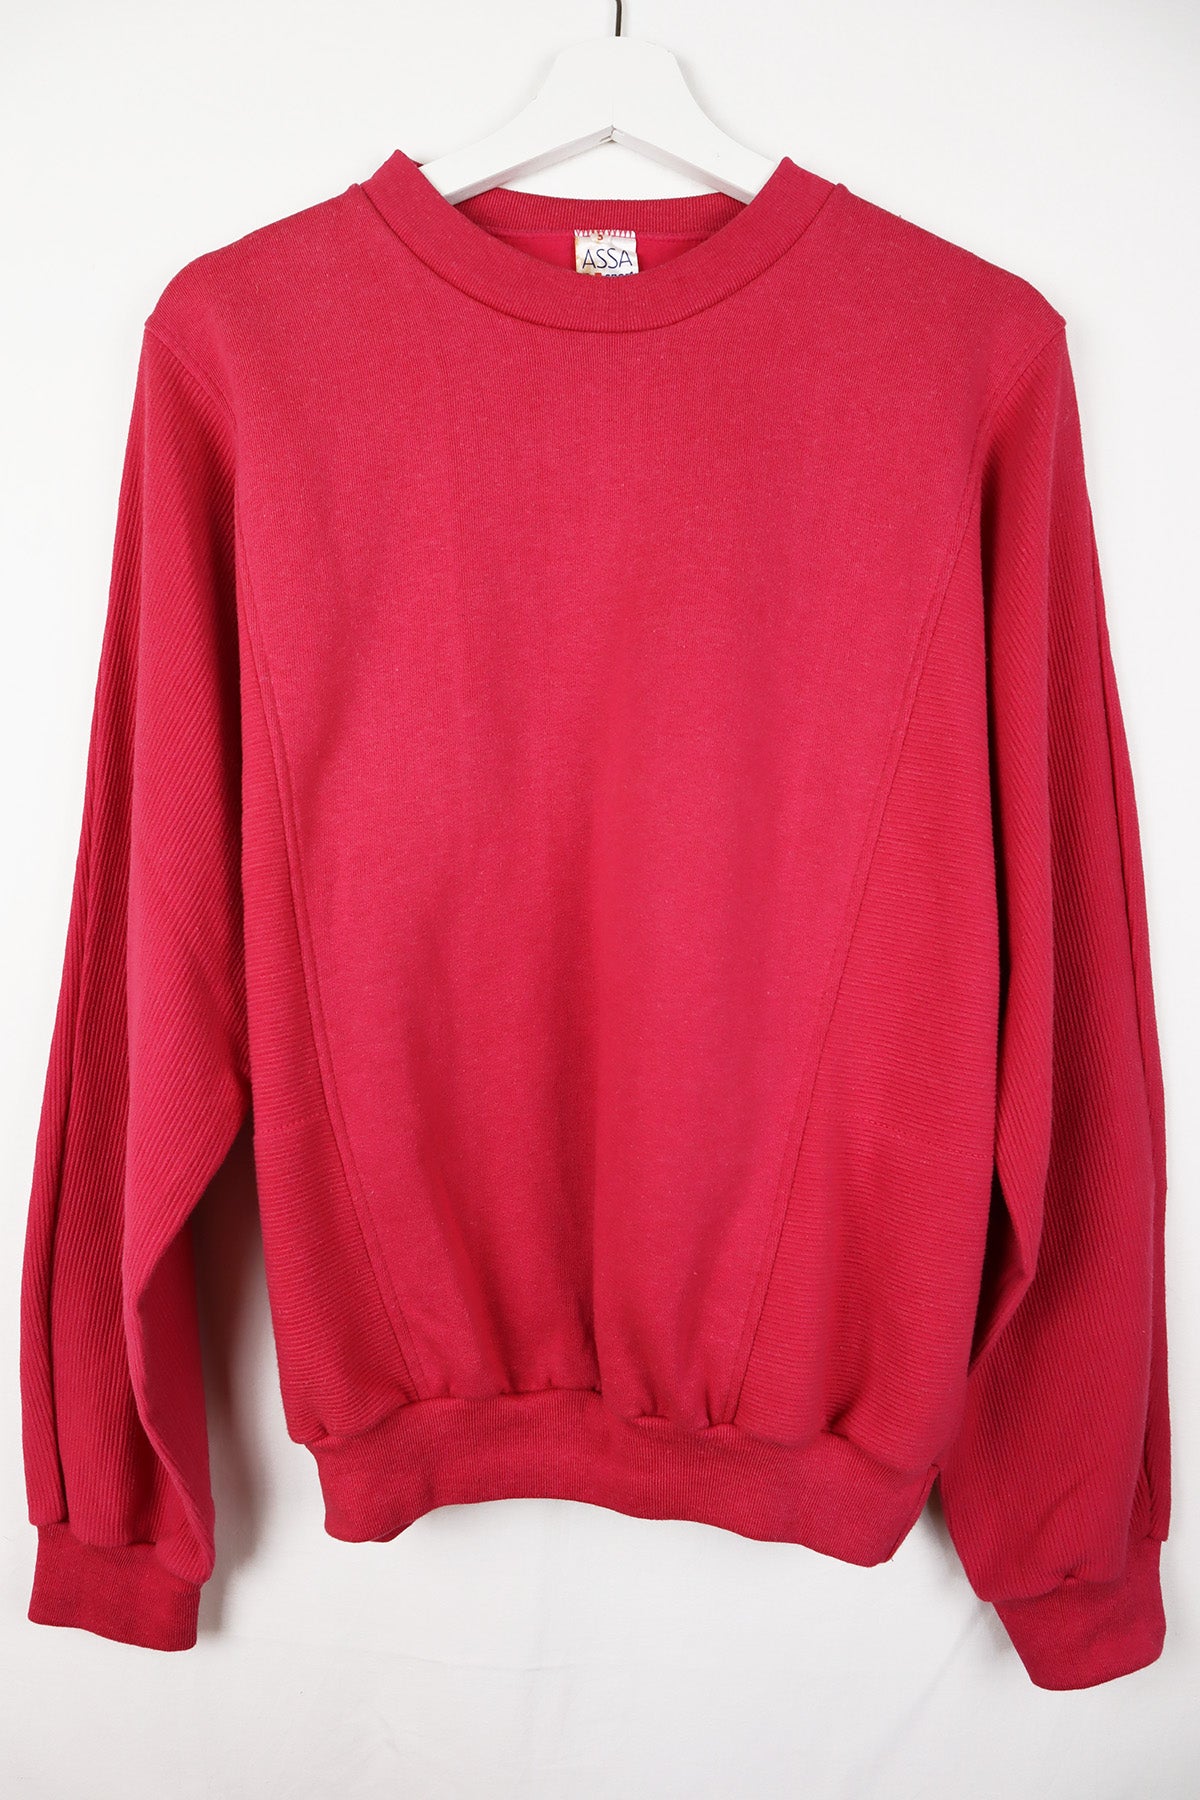 Sweater Vintage Himbeer Rot ( Gr. M )